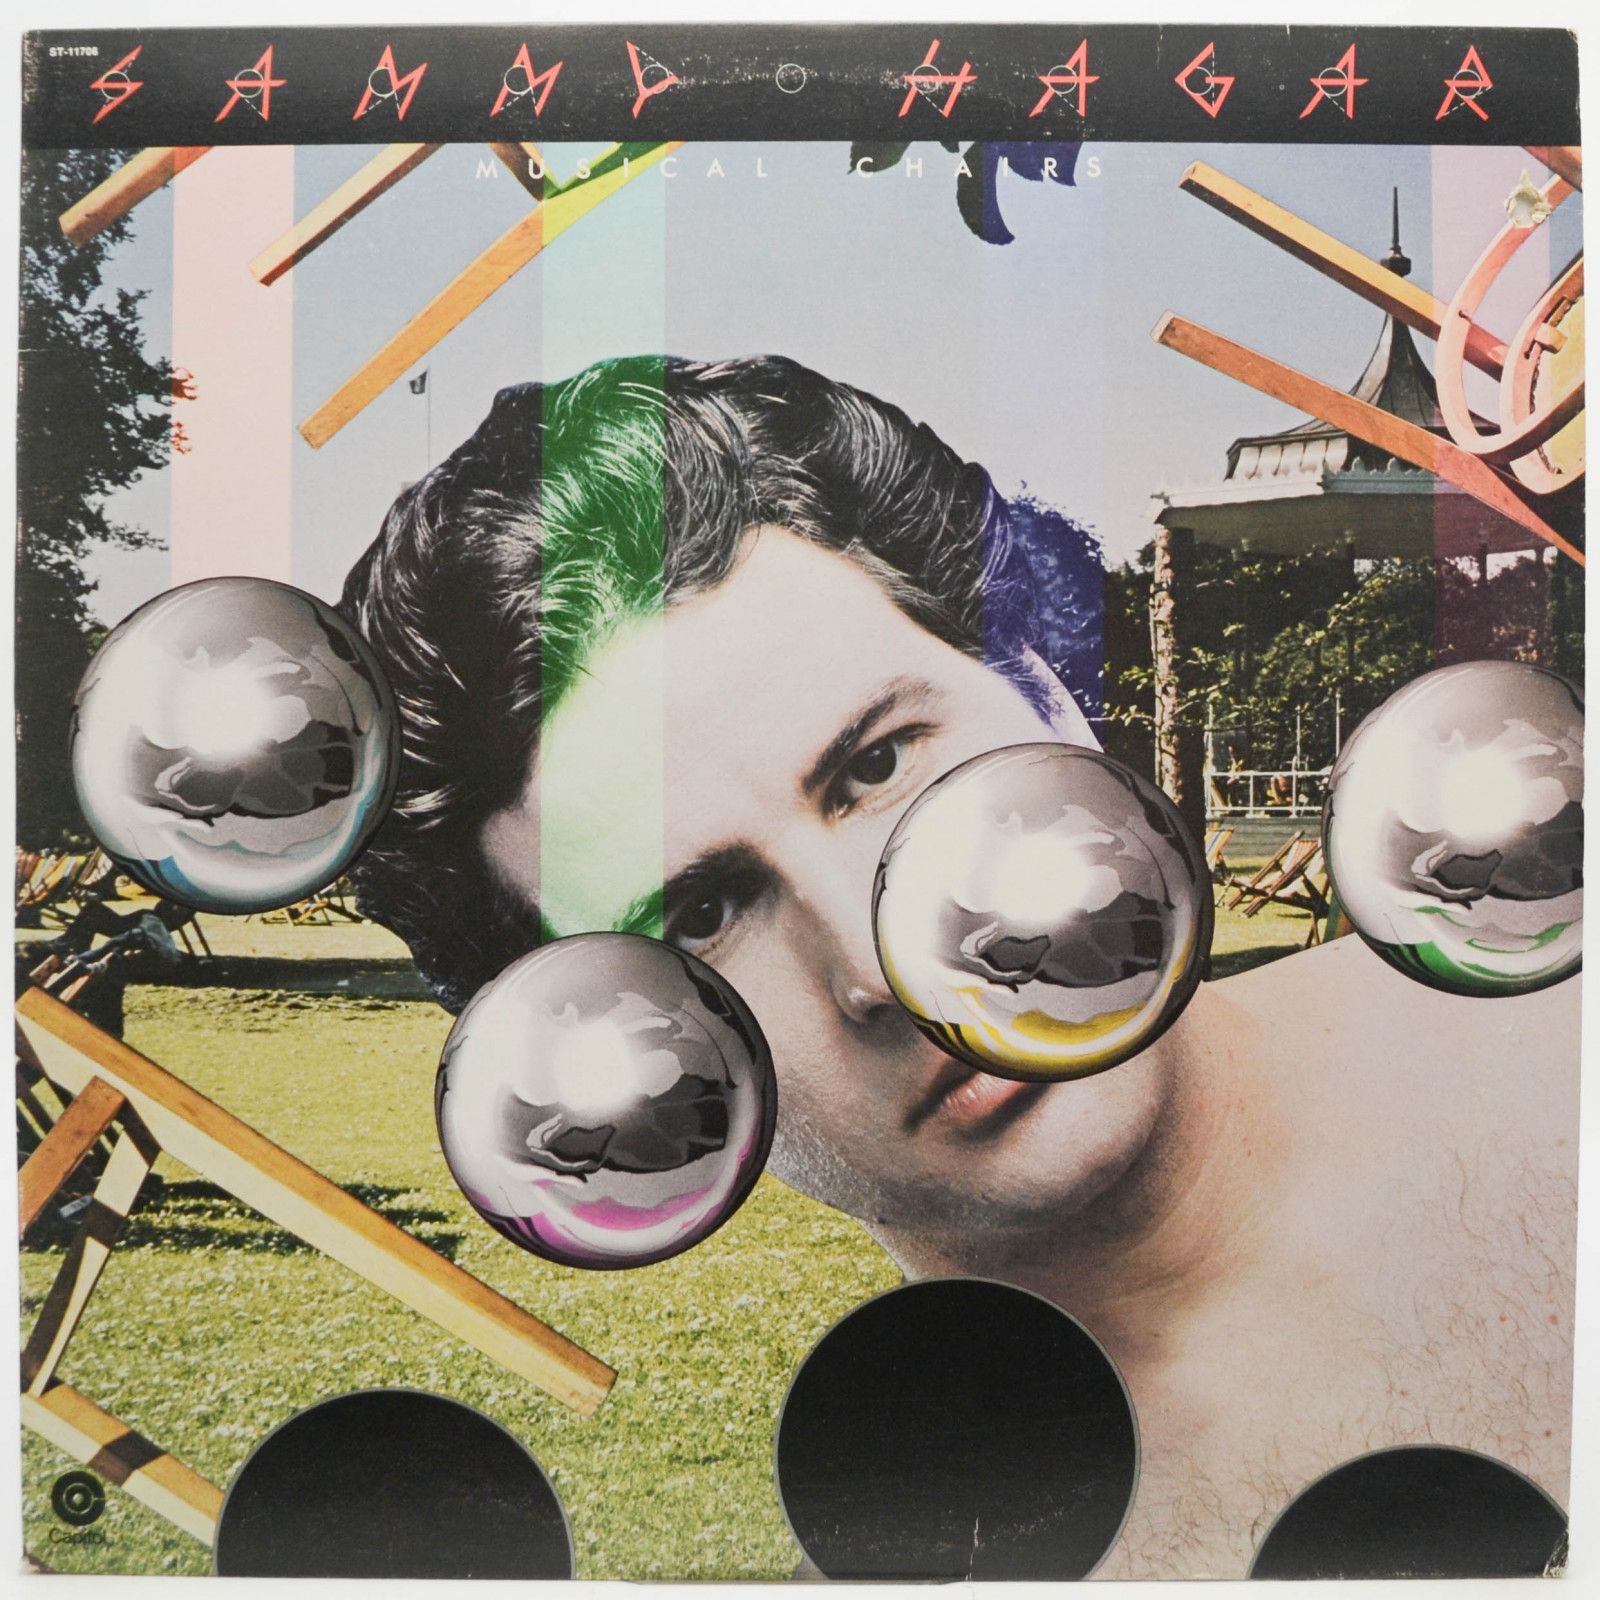 Sammy Hagar — Musical Chairs, 1977